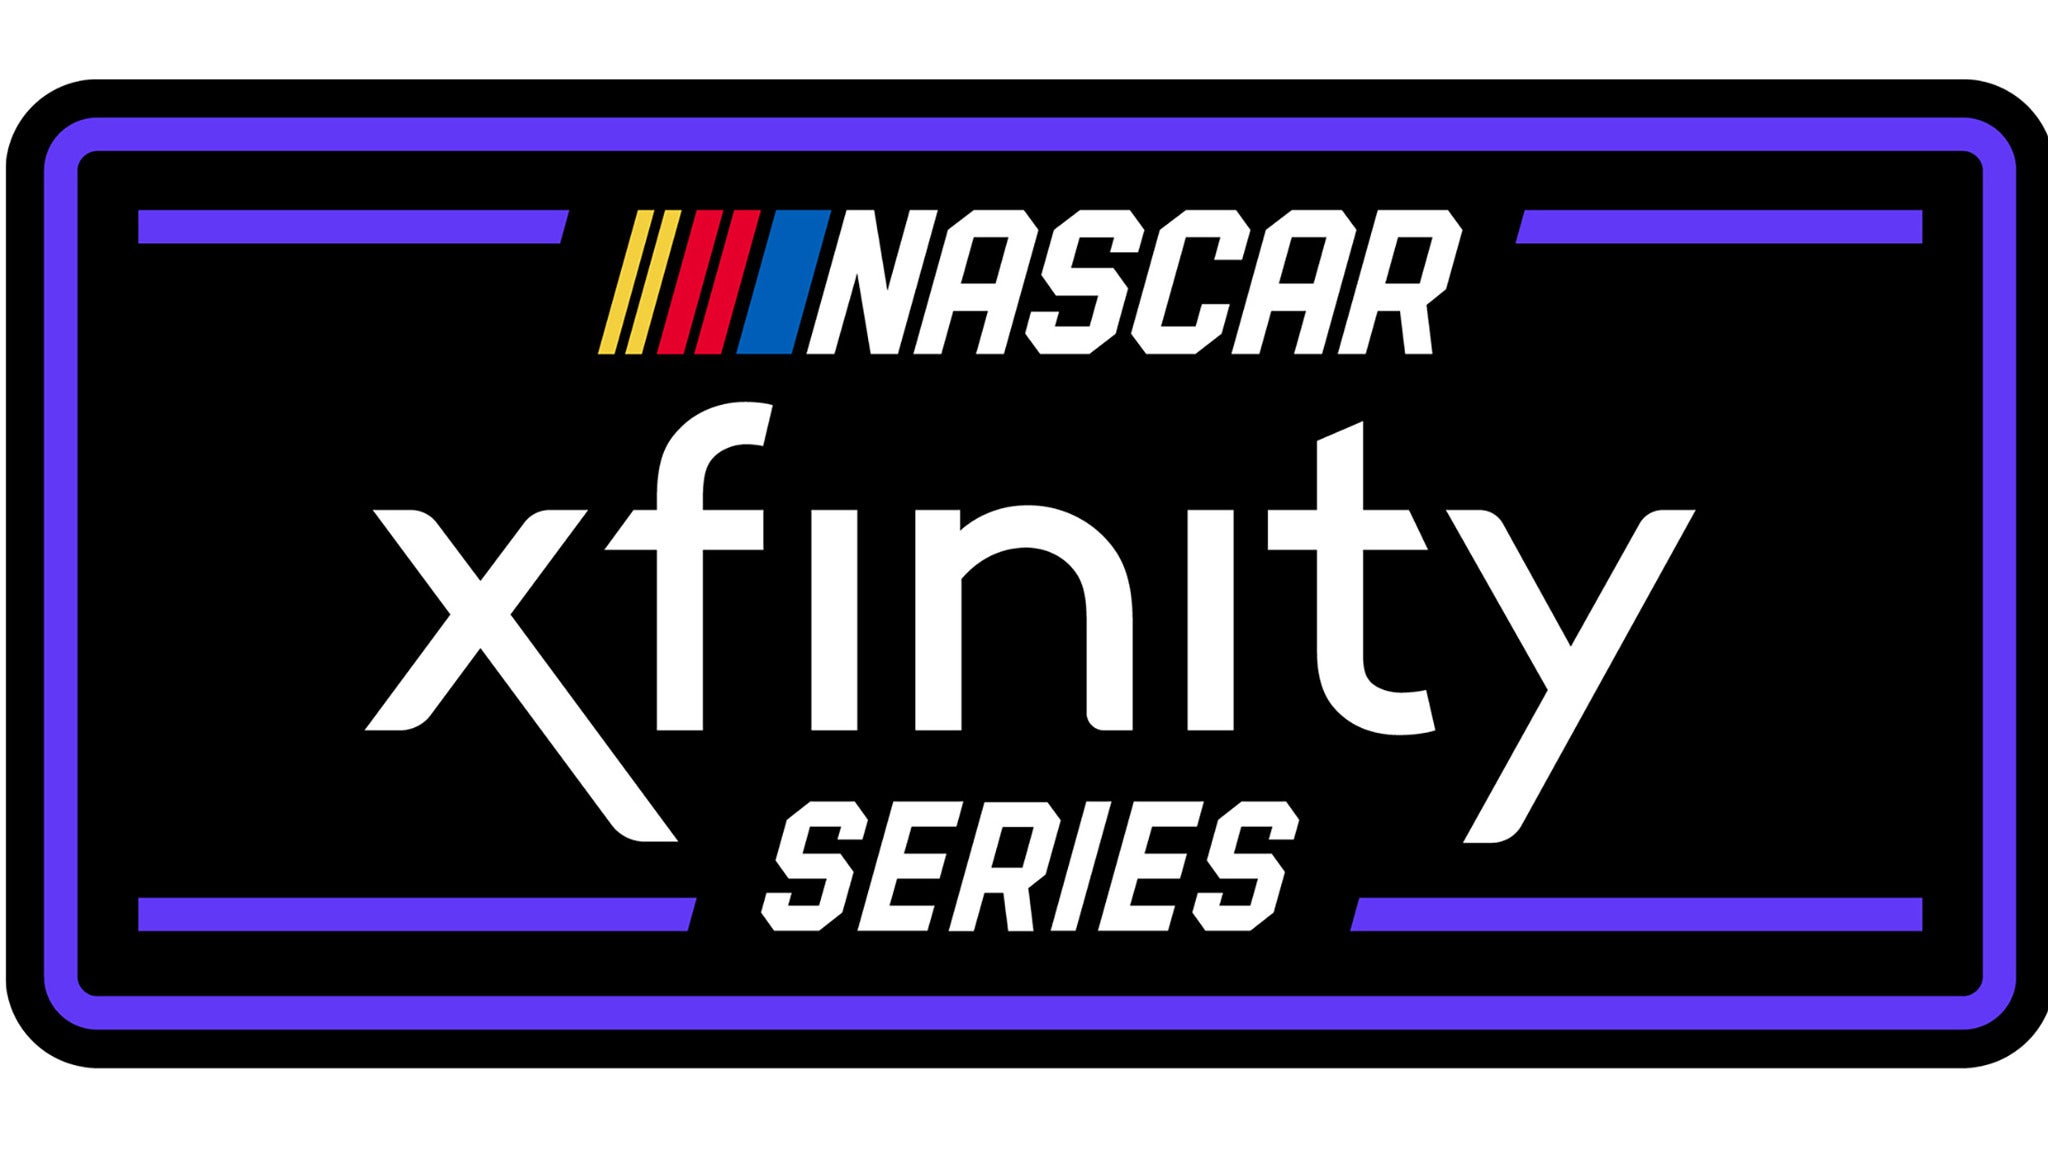 Alsco Uniforms 250 NASCAR Xfinity Series